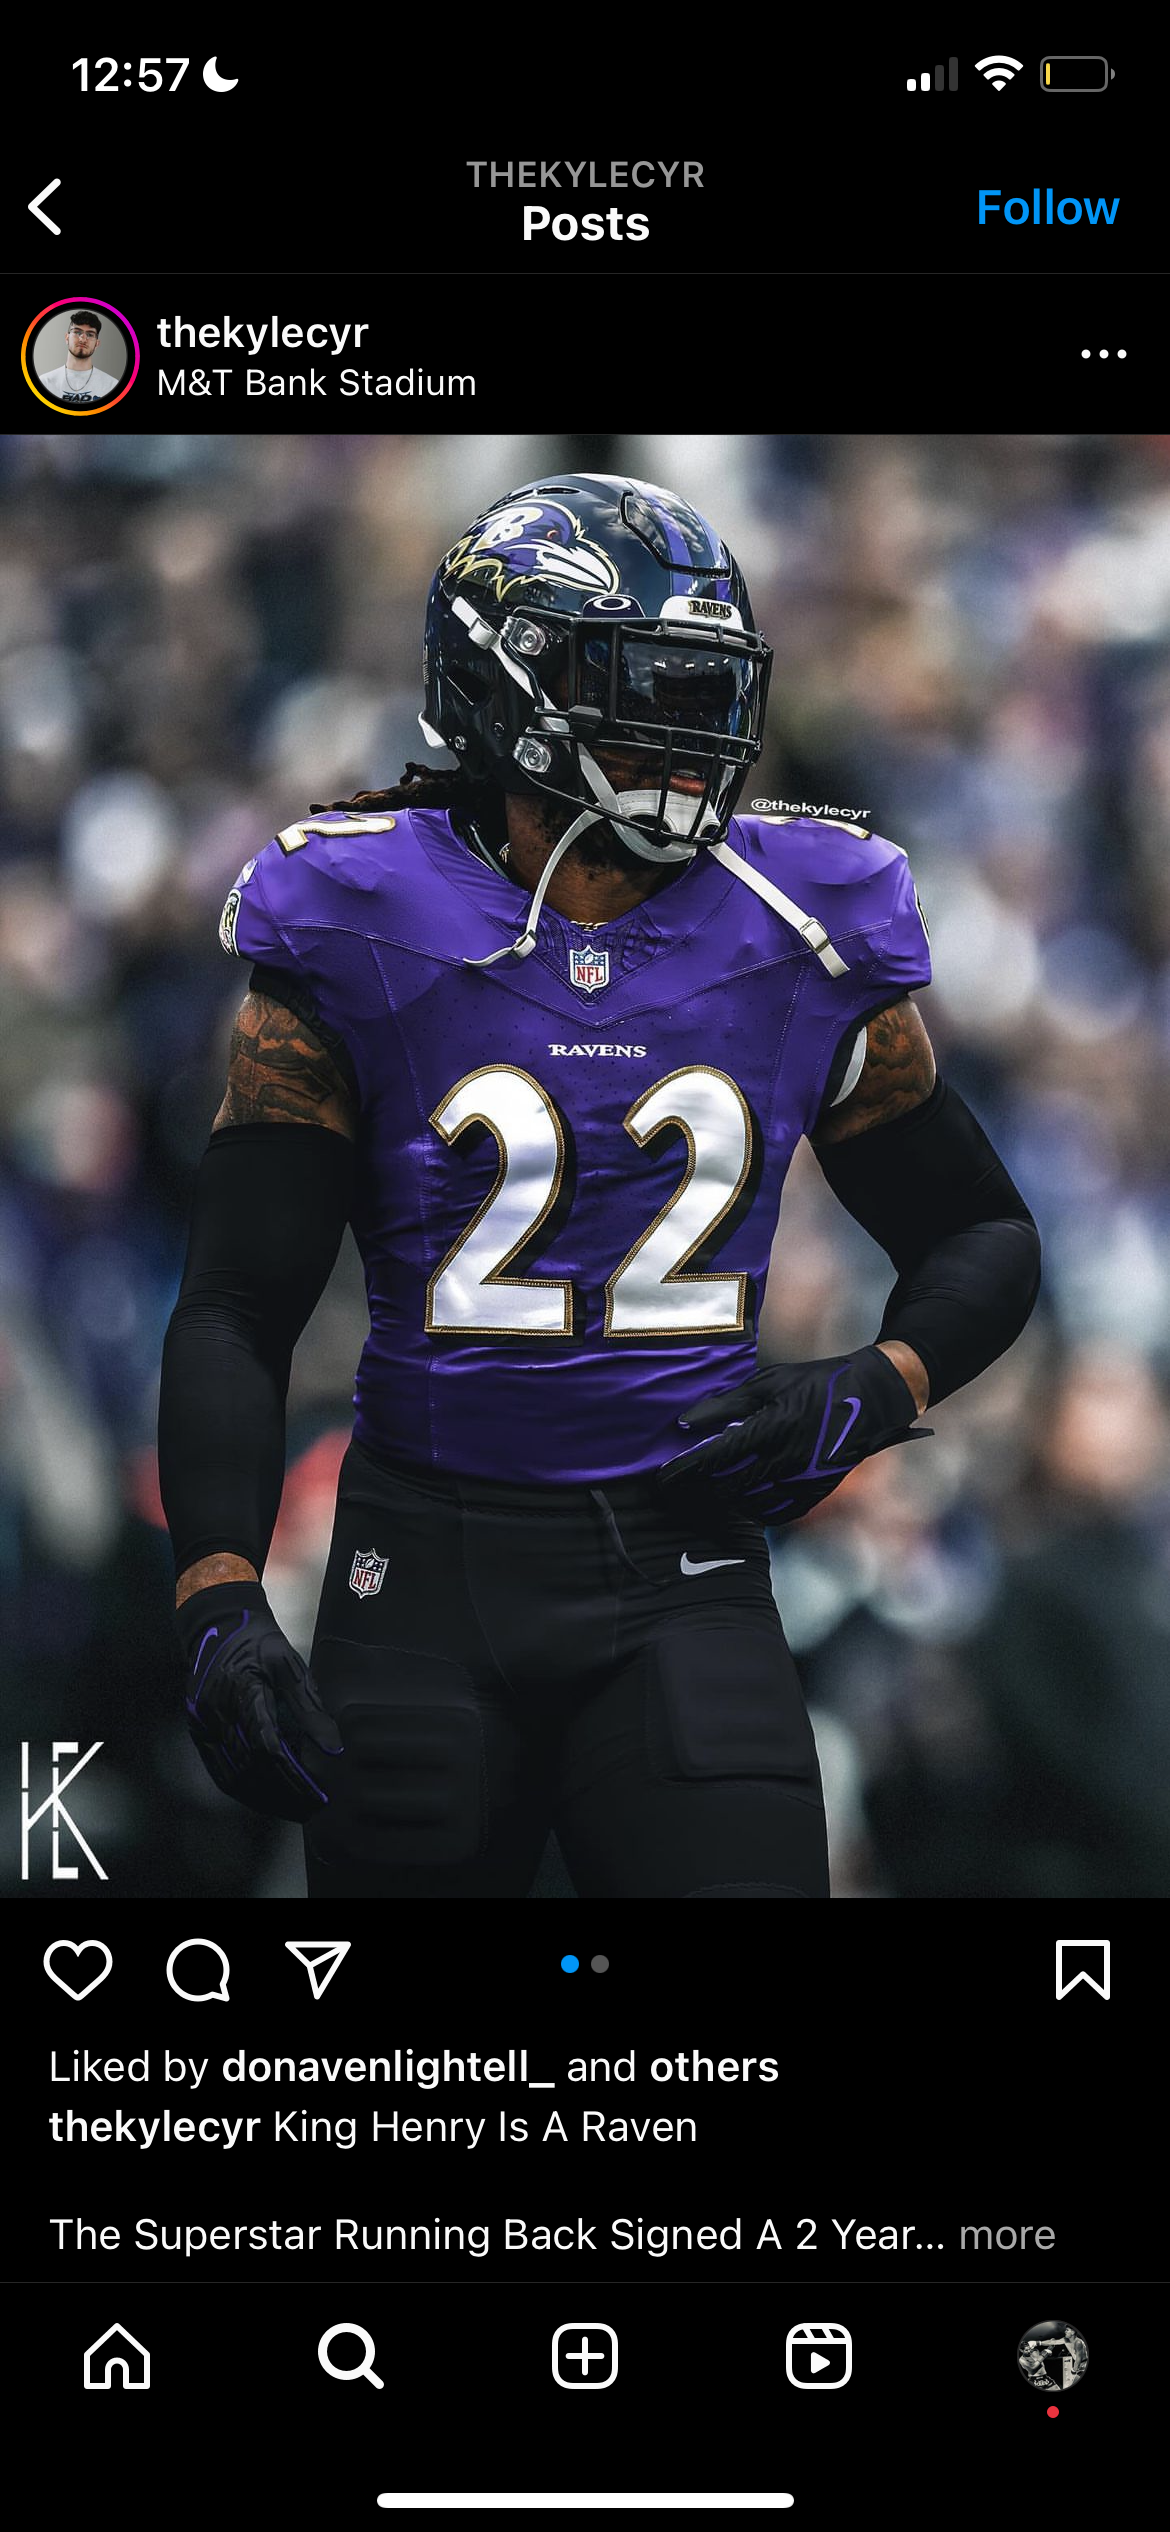 Derrick Henry Baltimore Ravens NFL F.U.S.E Style Nike Vapor Limited Home Jersey - Purple